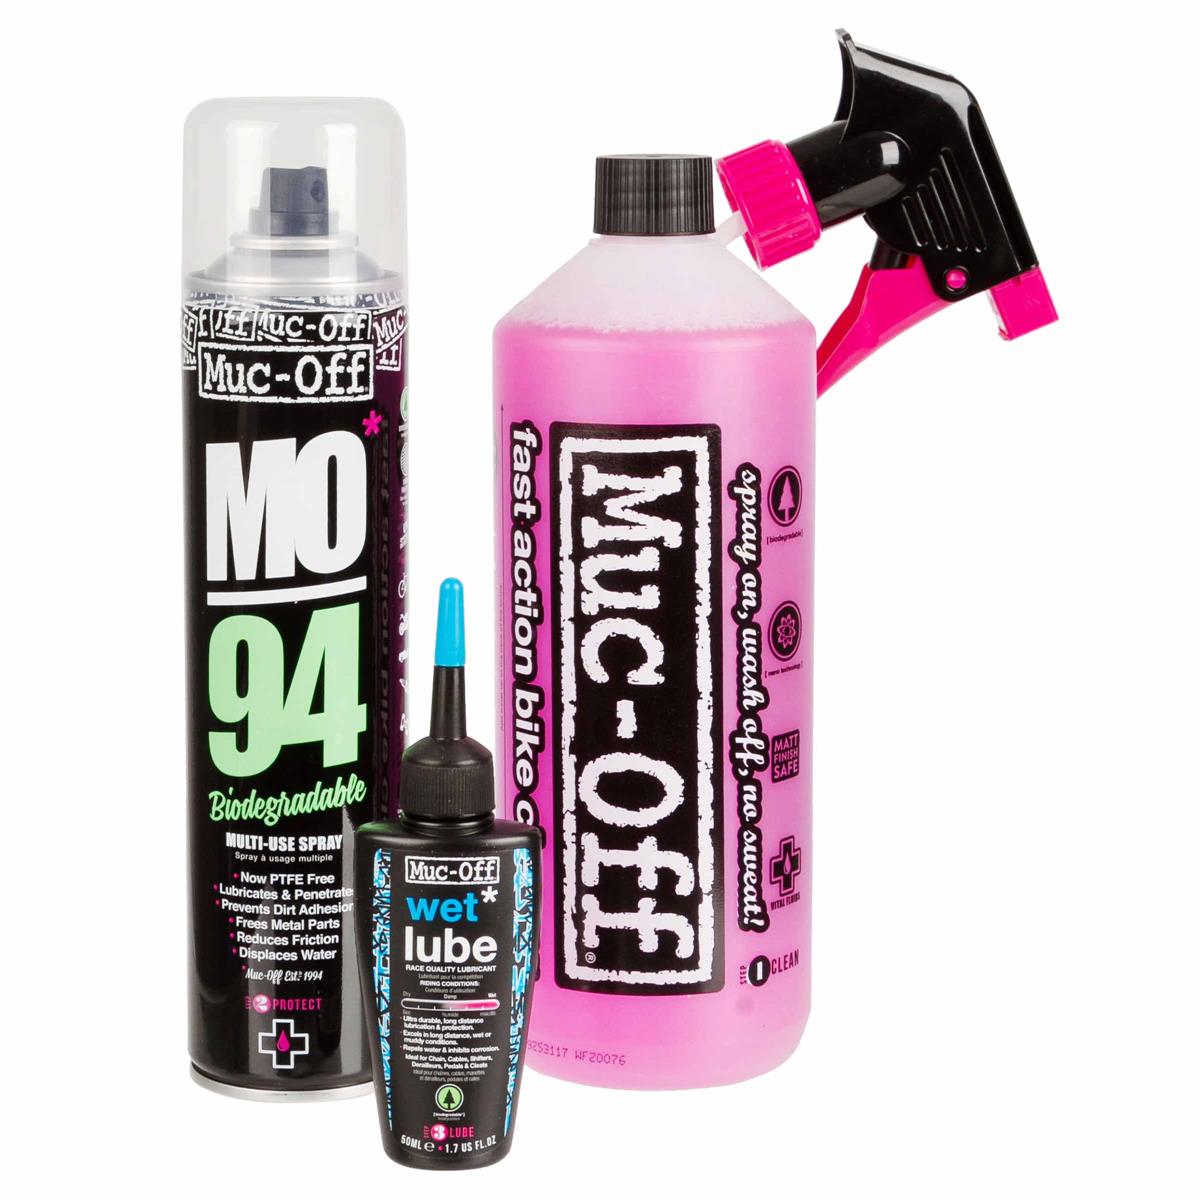 Muc-Off Bike Cleaner Wash, Protect & Lube Kit 1,45 L